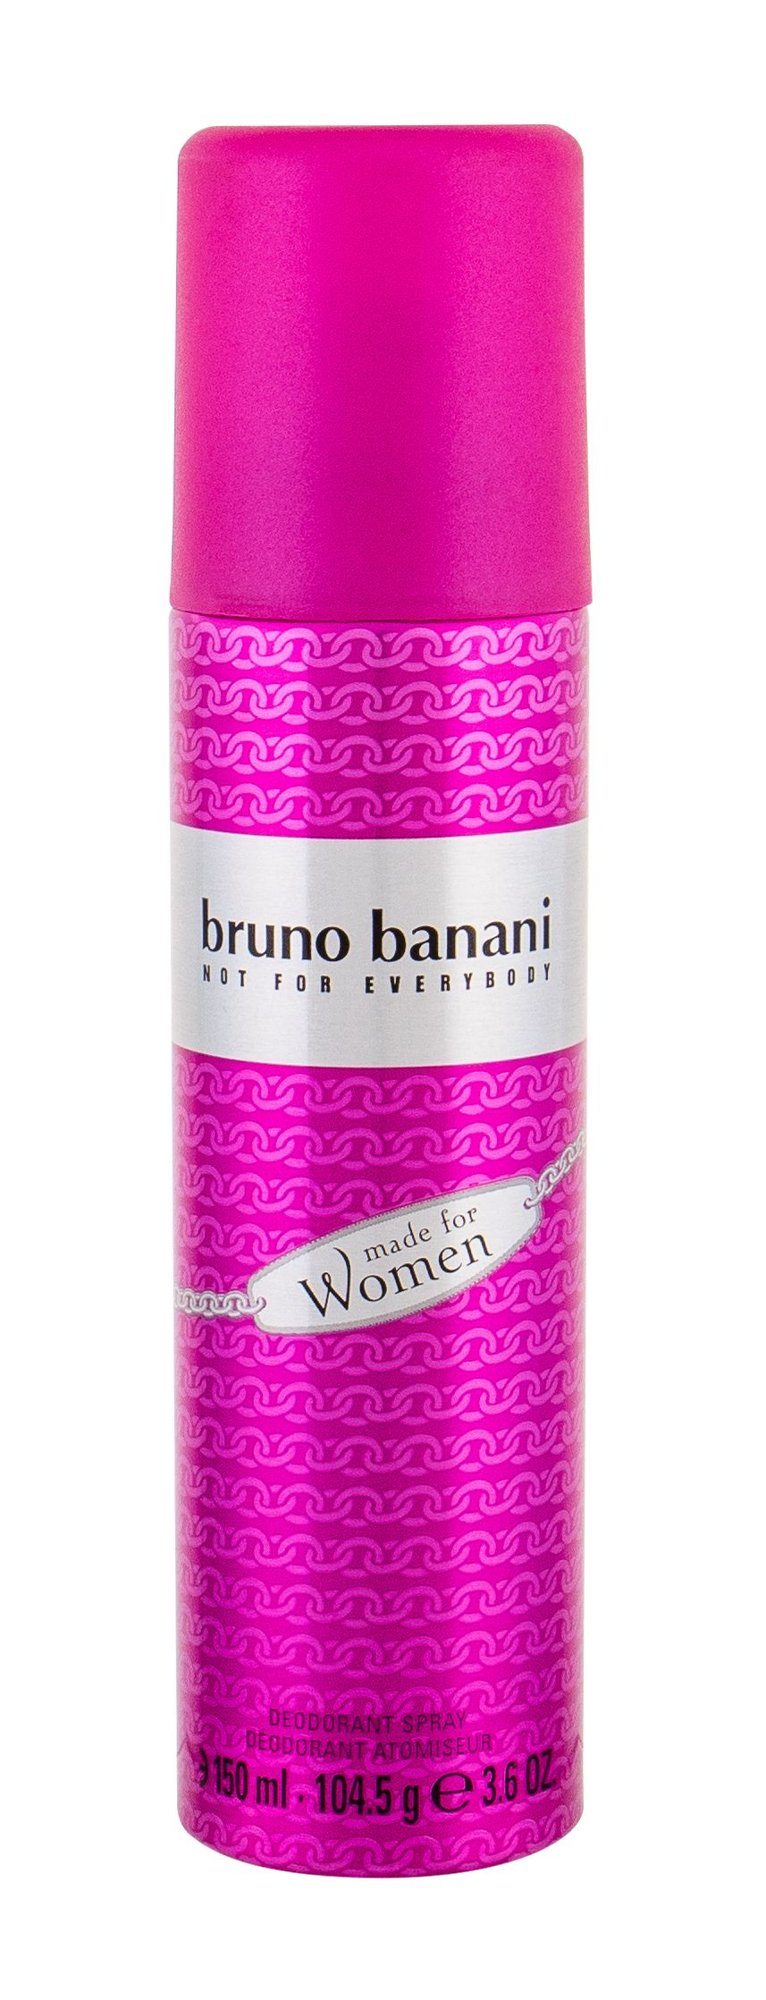 Bruno Banani Made For Woman, Dezodorant 150ml